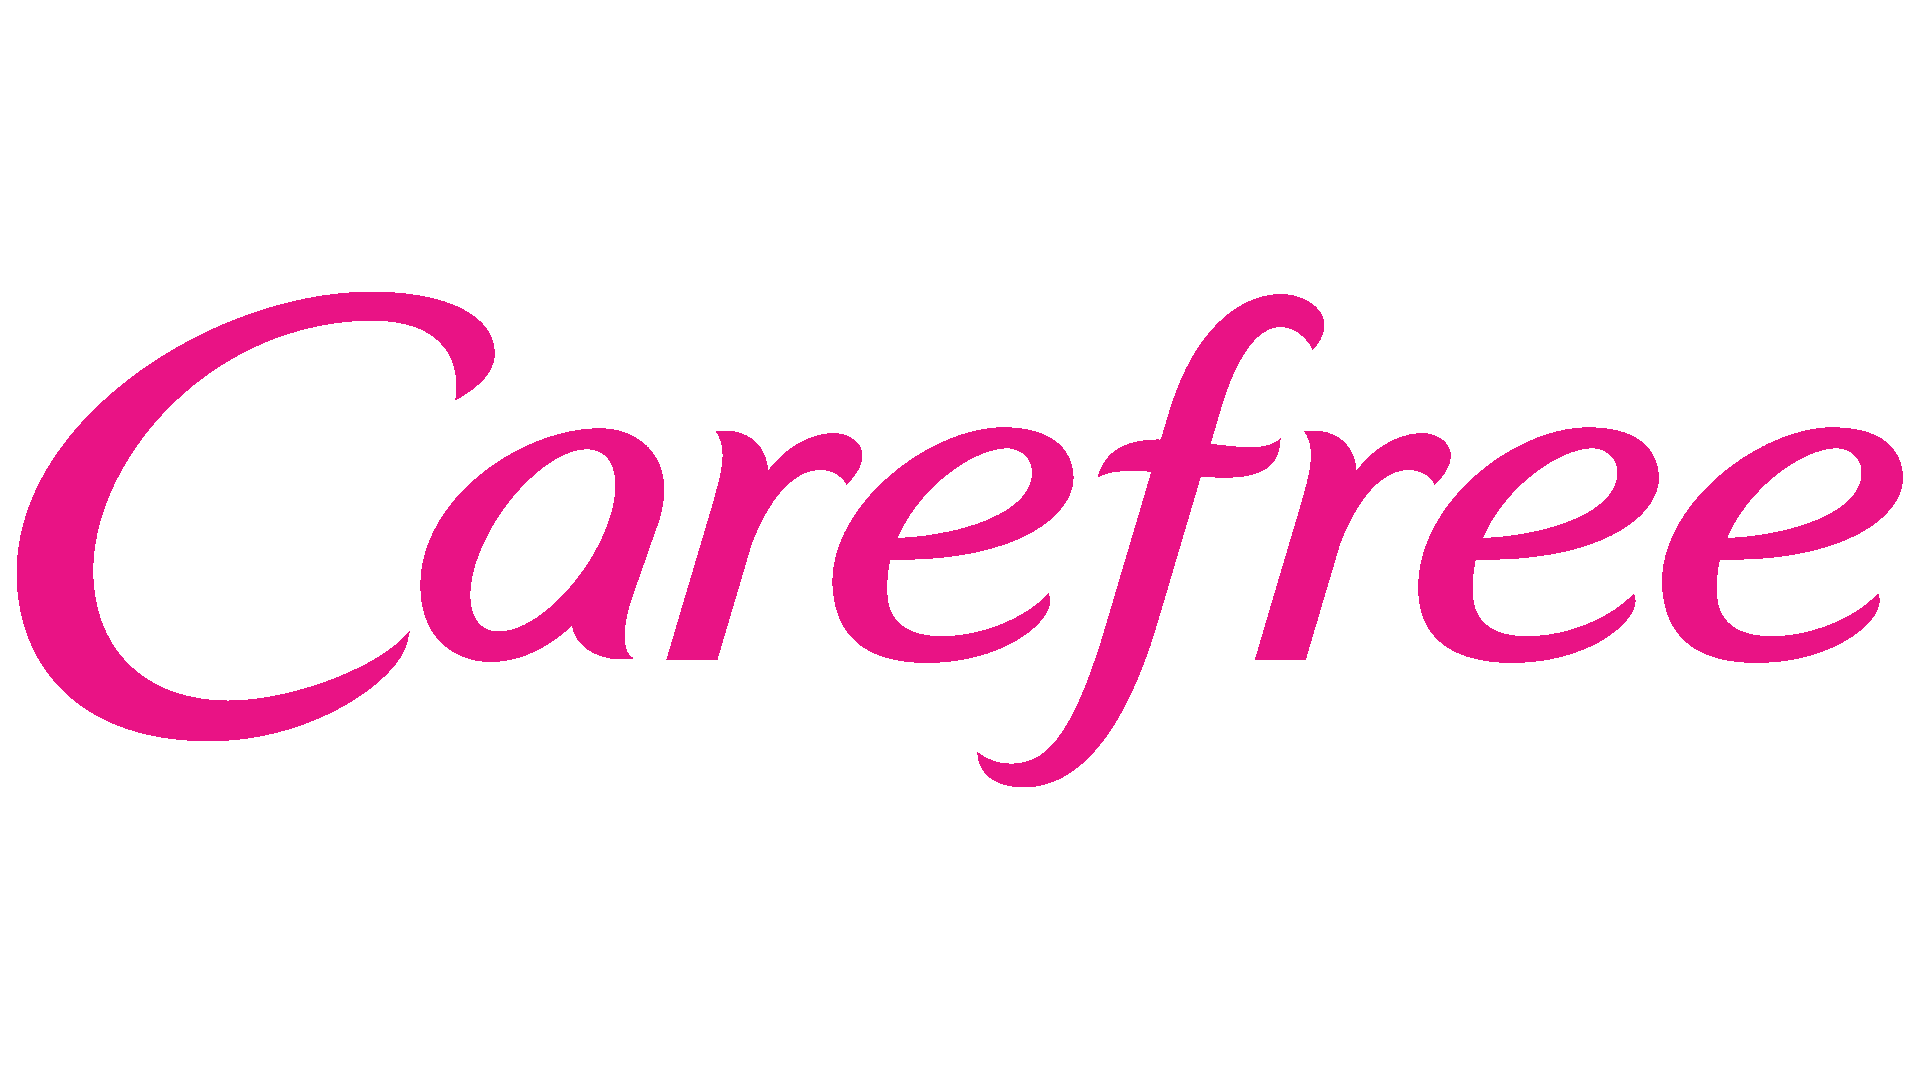 Brand: Carefree